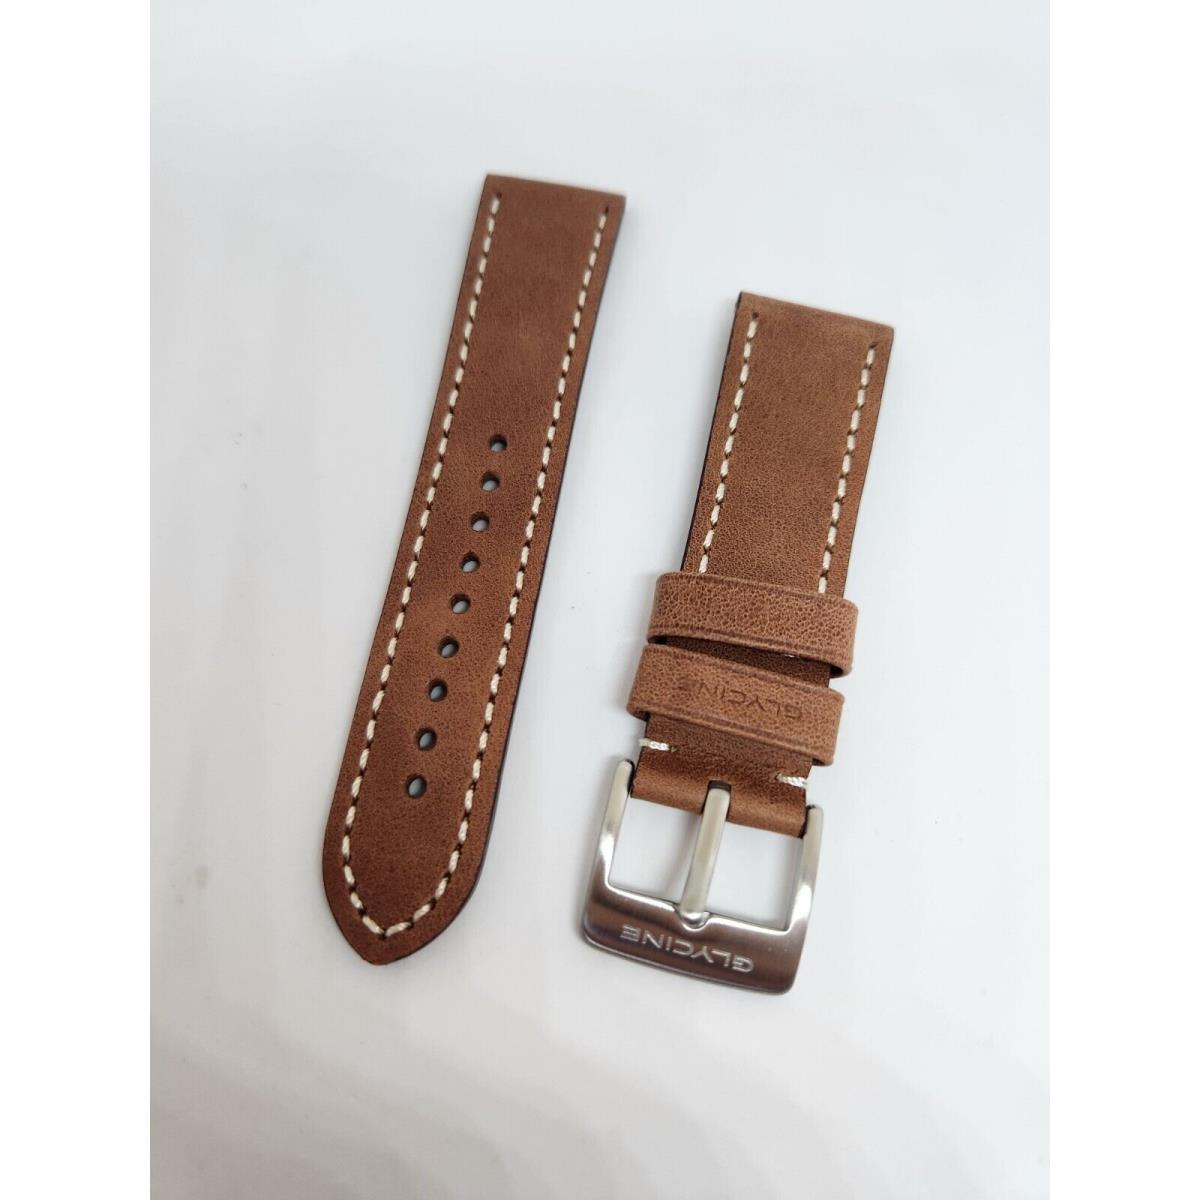 Oem Glycine 24mm Brown Leather Strap Band Bracelet with Steel Buckle